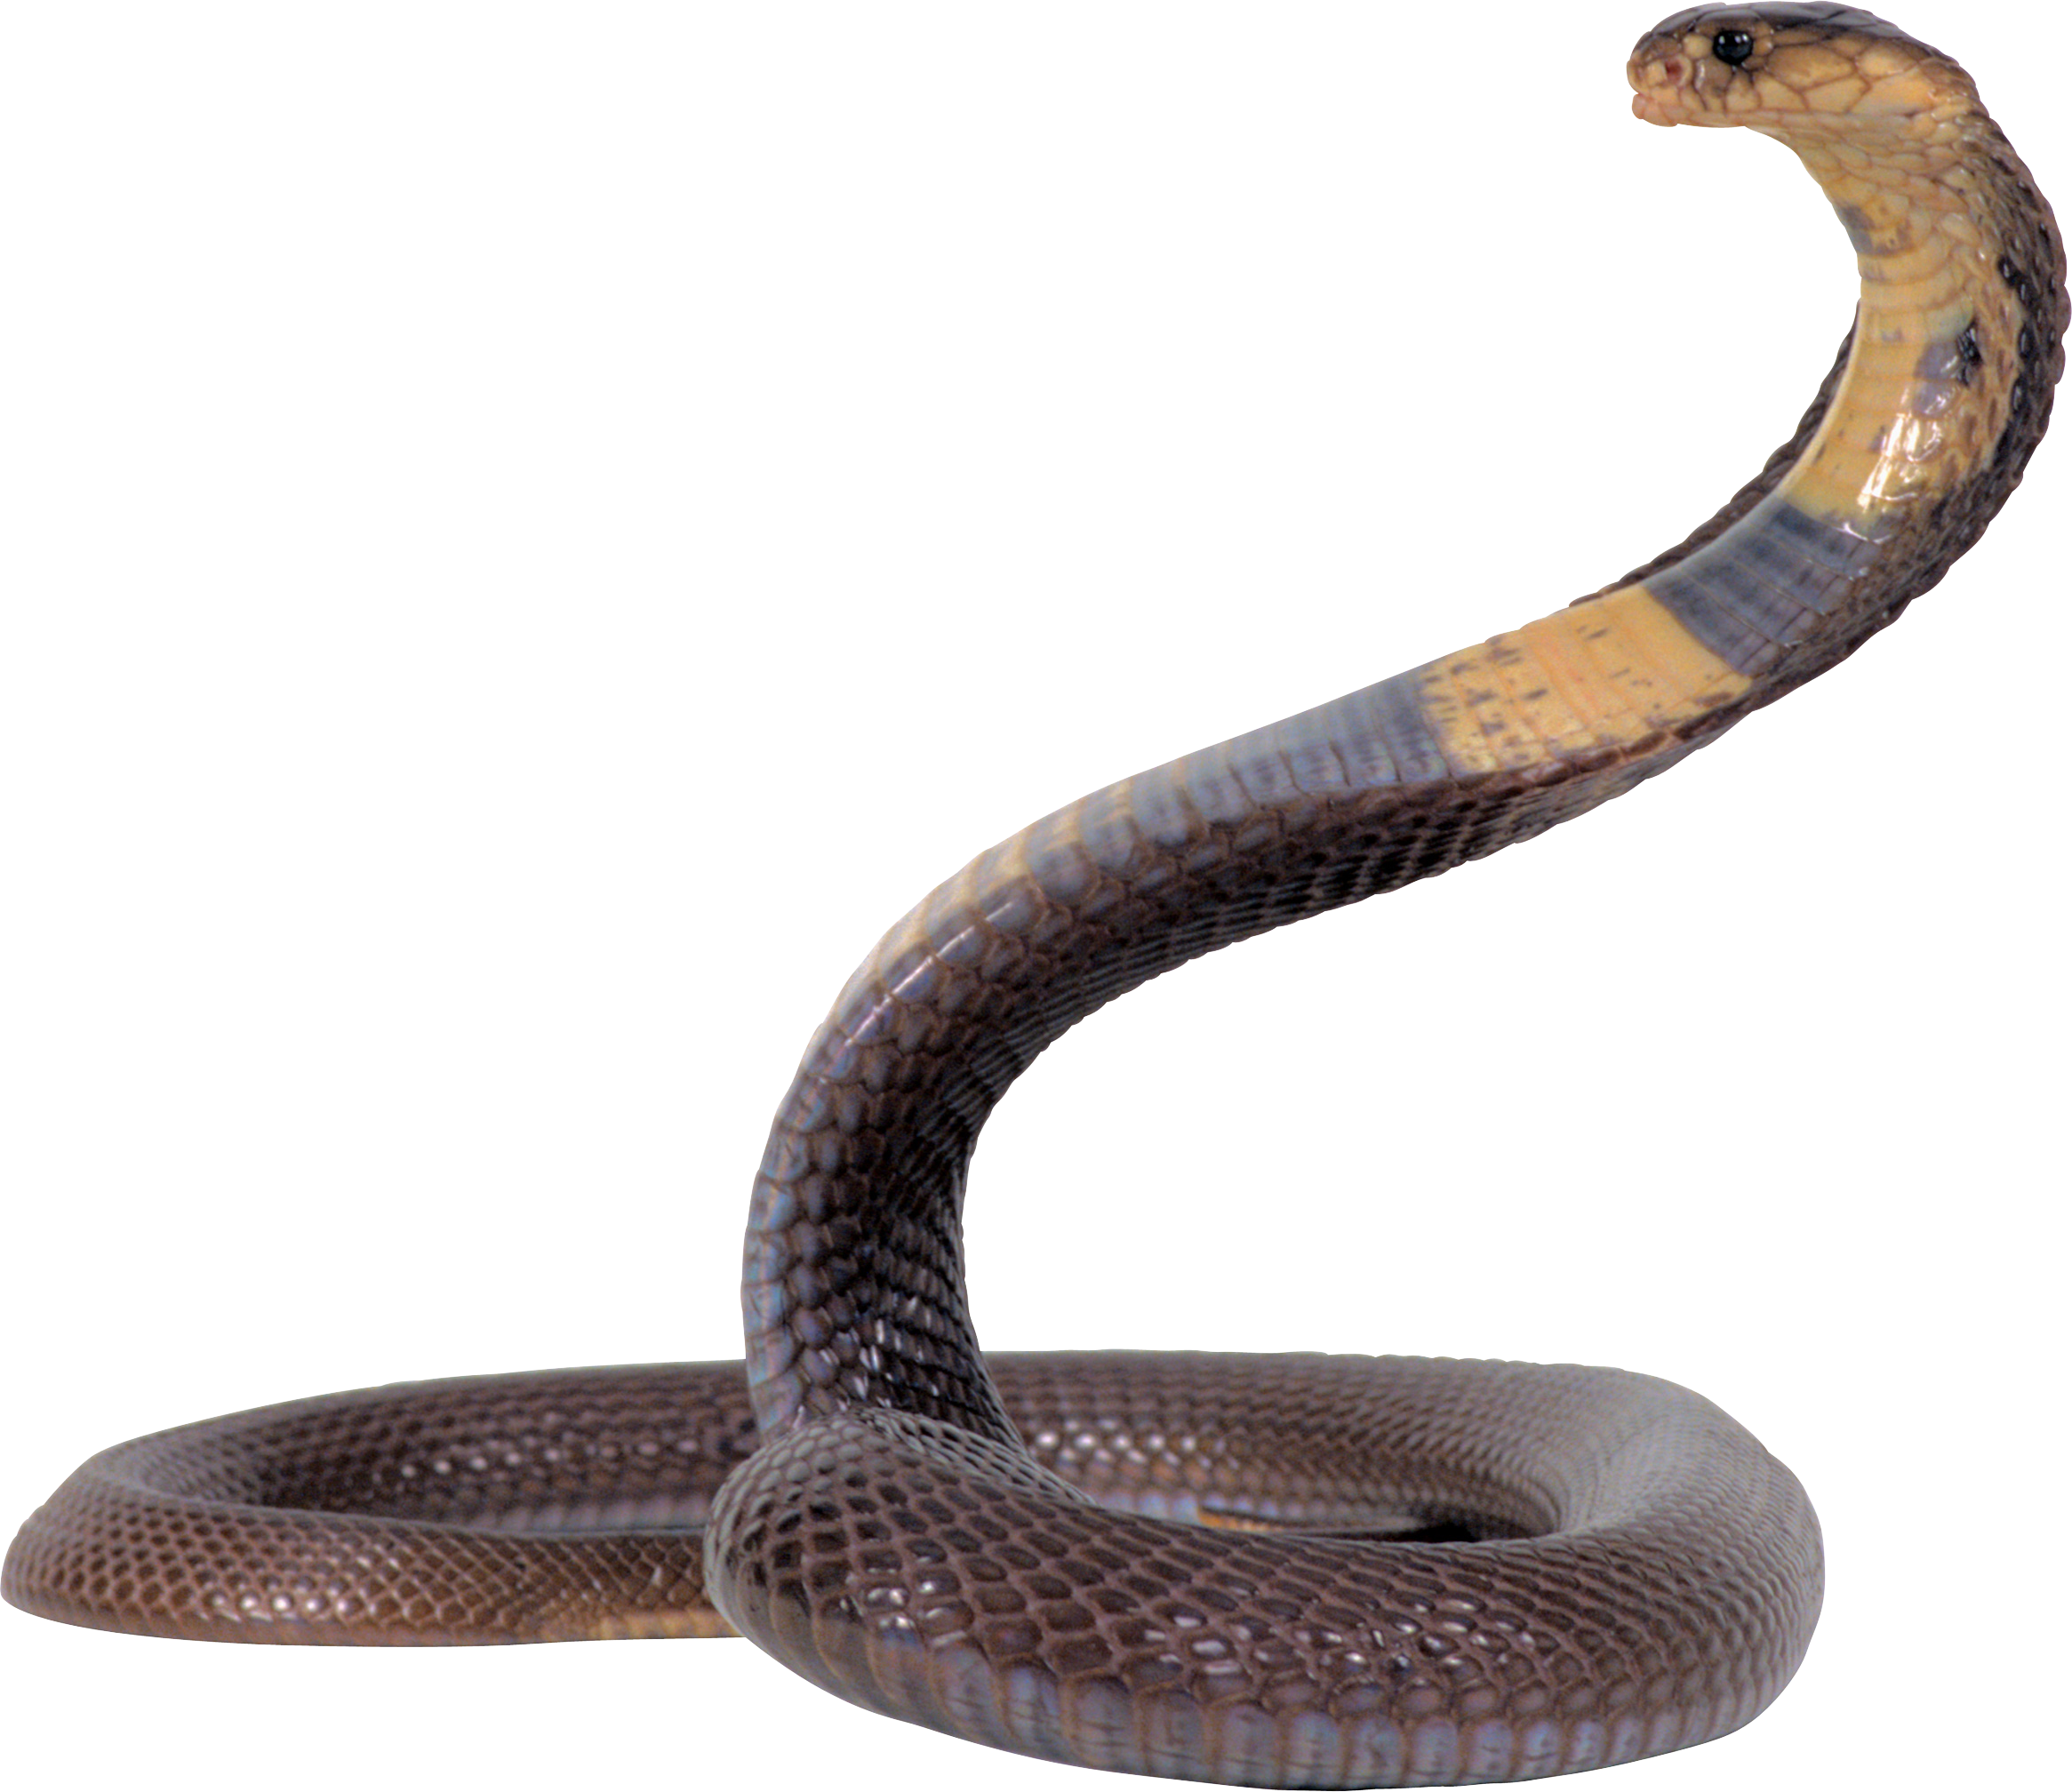 Cobra Snake PNG HD - 136742